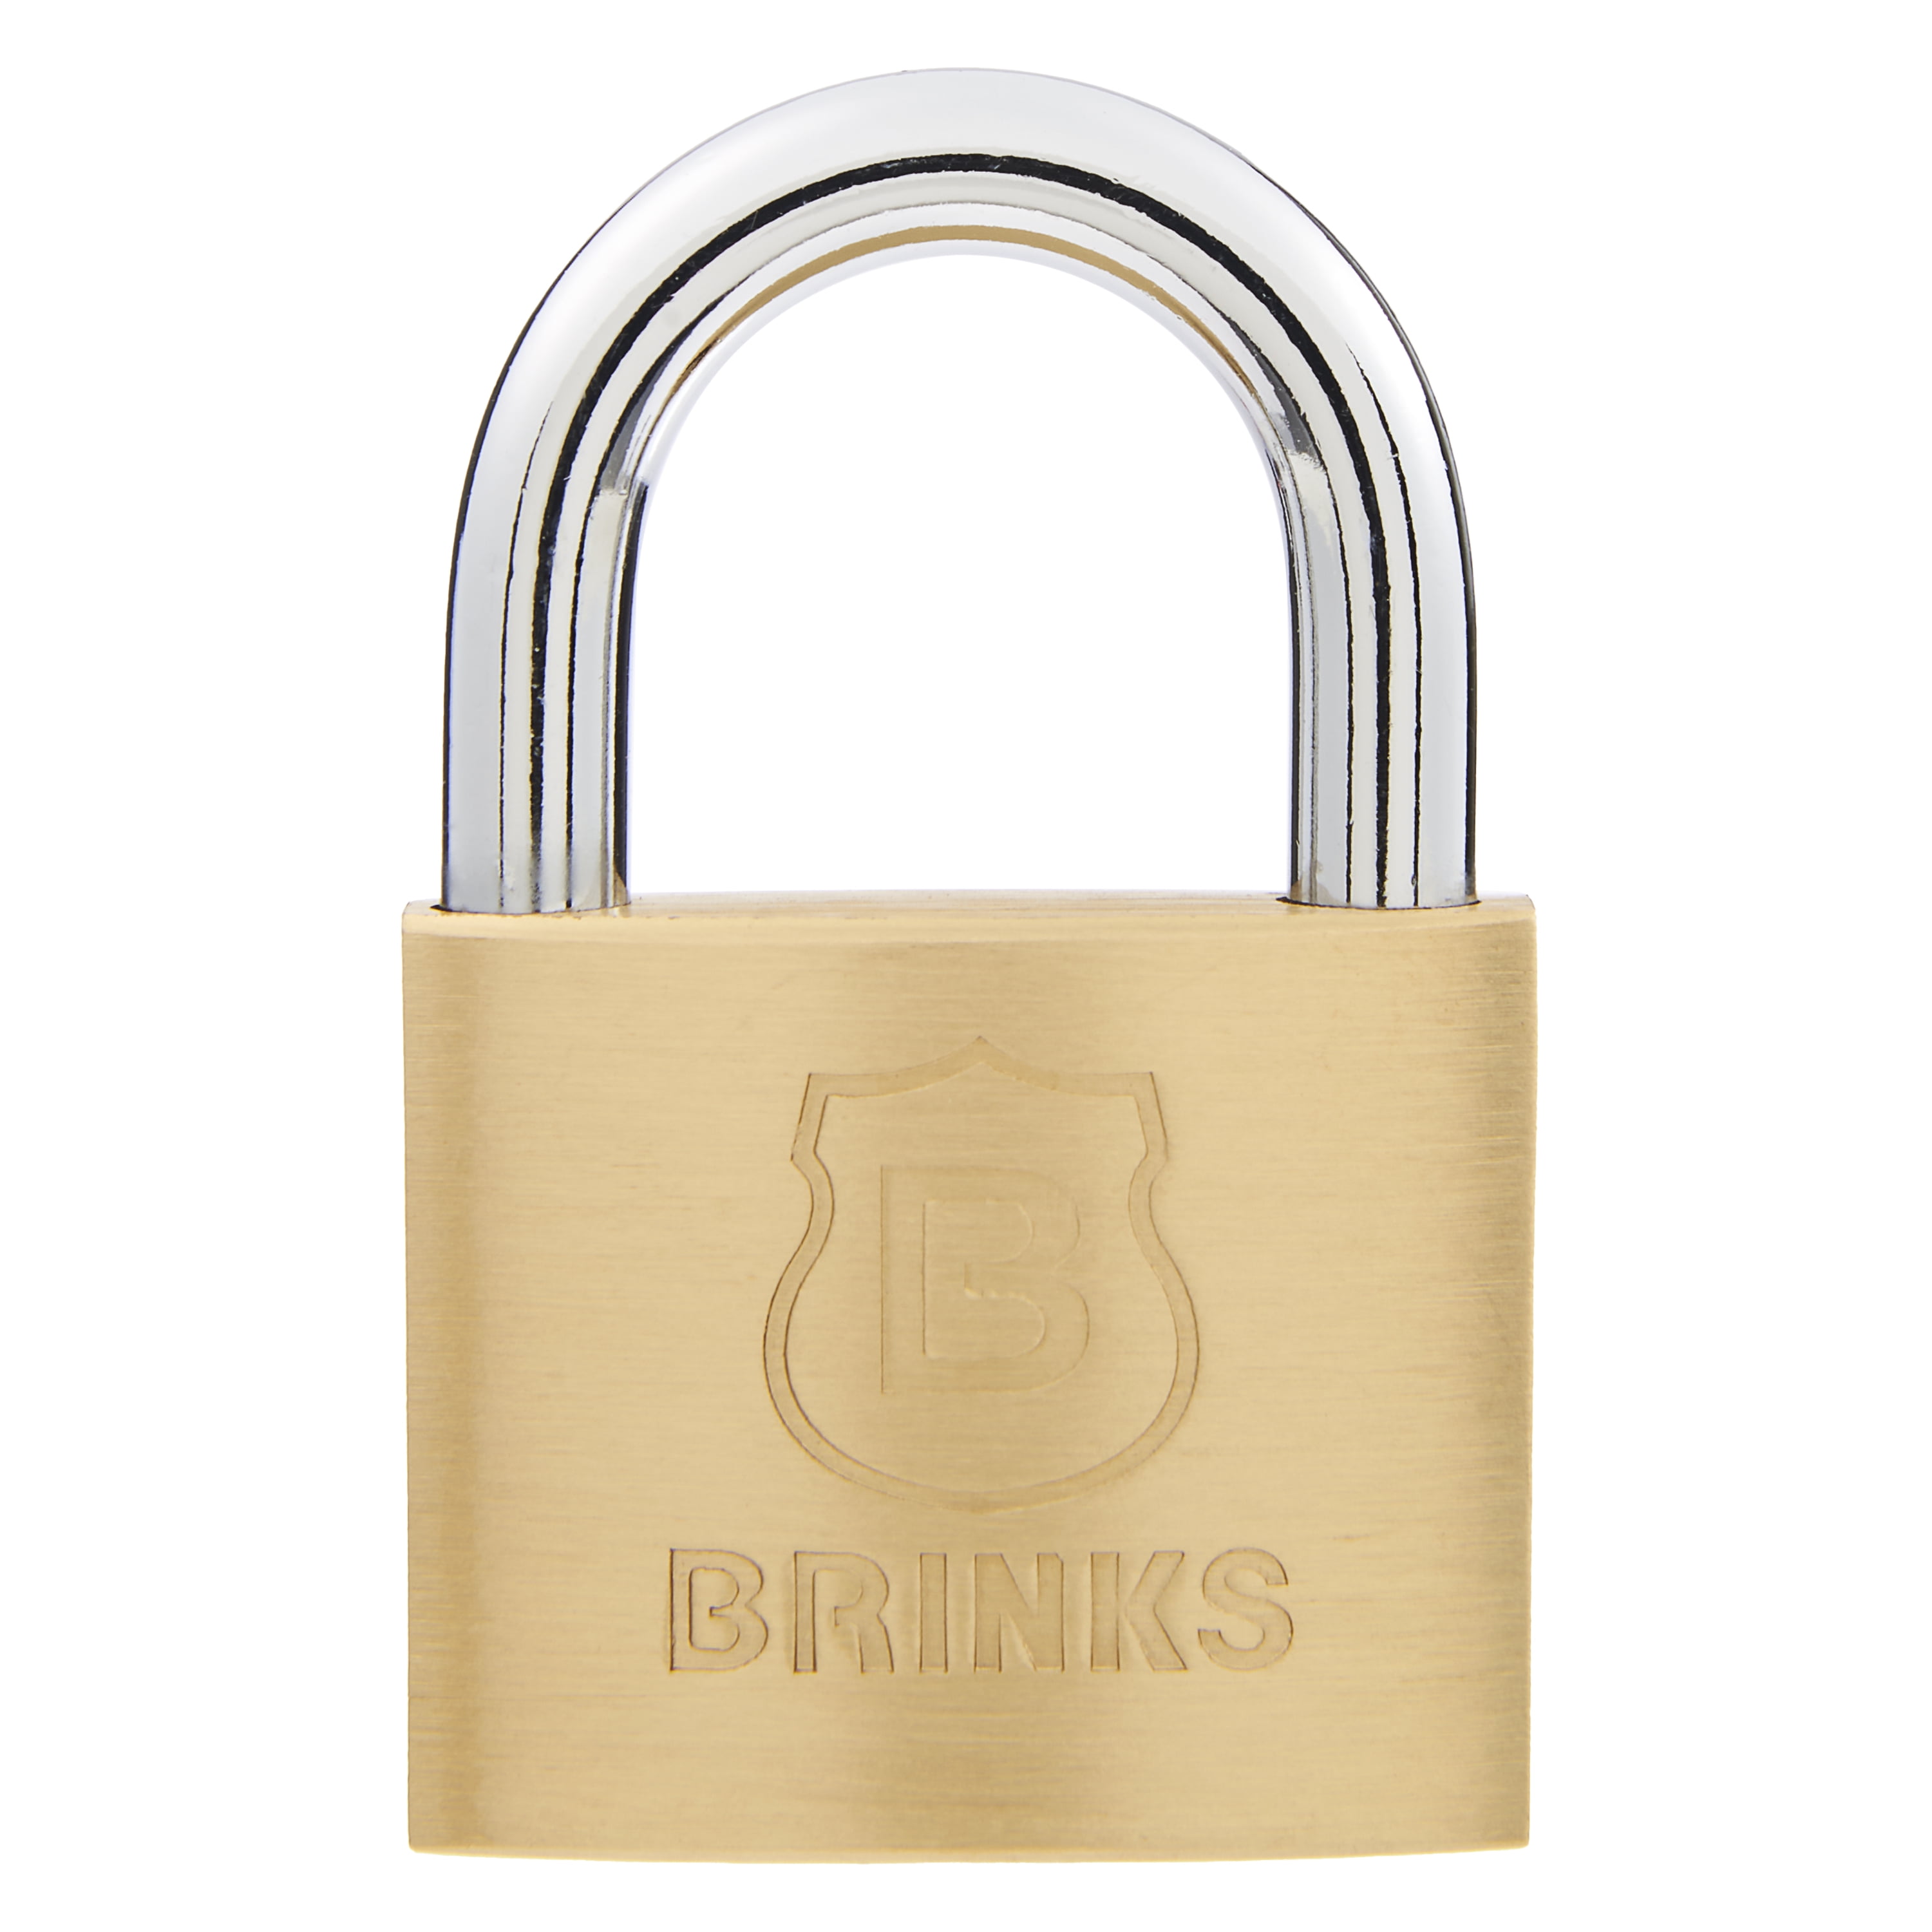 Silverline Brass Padlock 40mm Locks And Accessories 